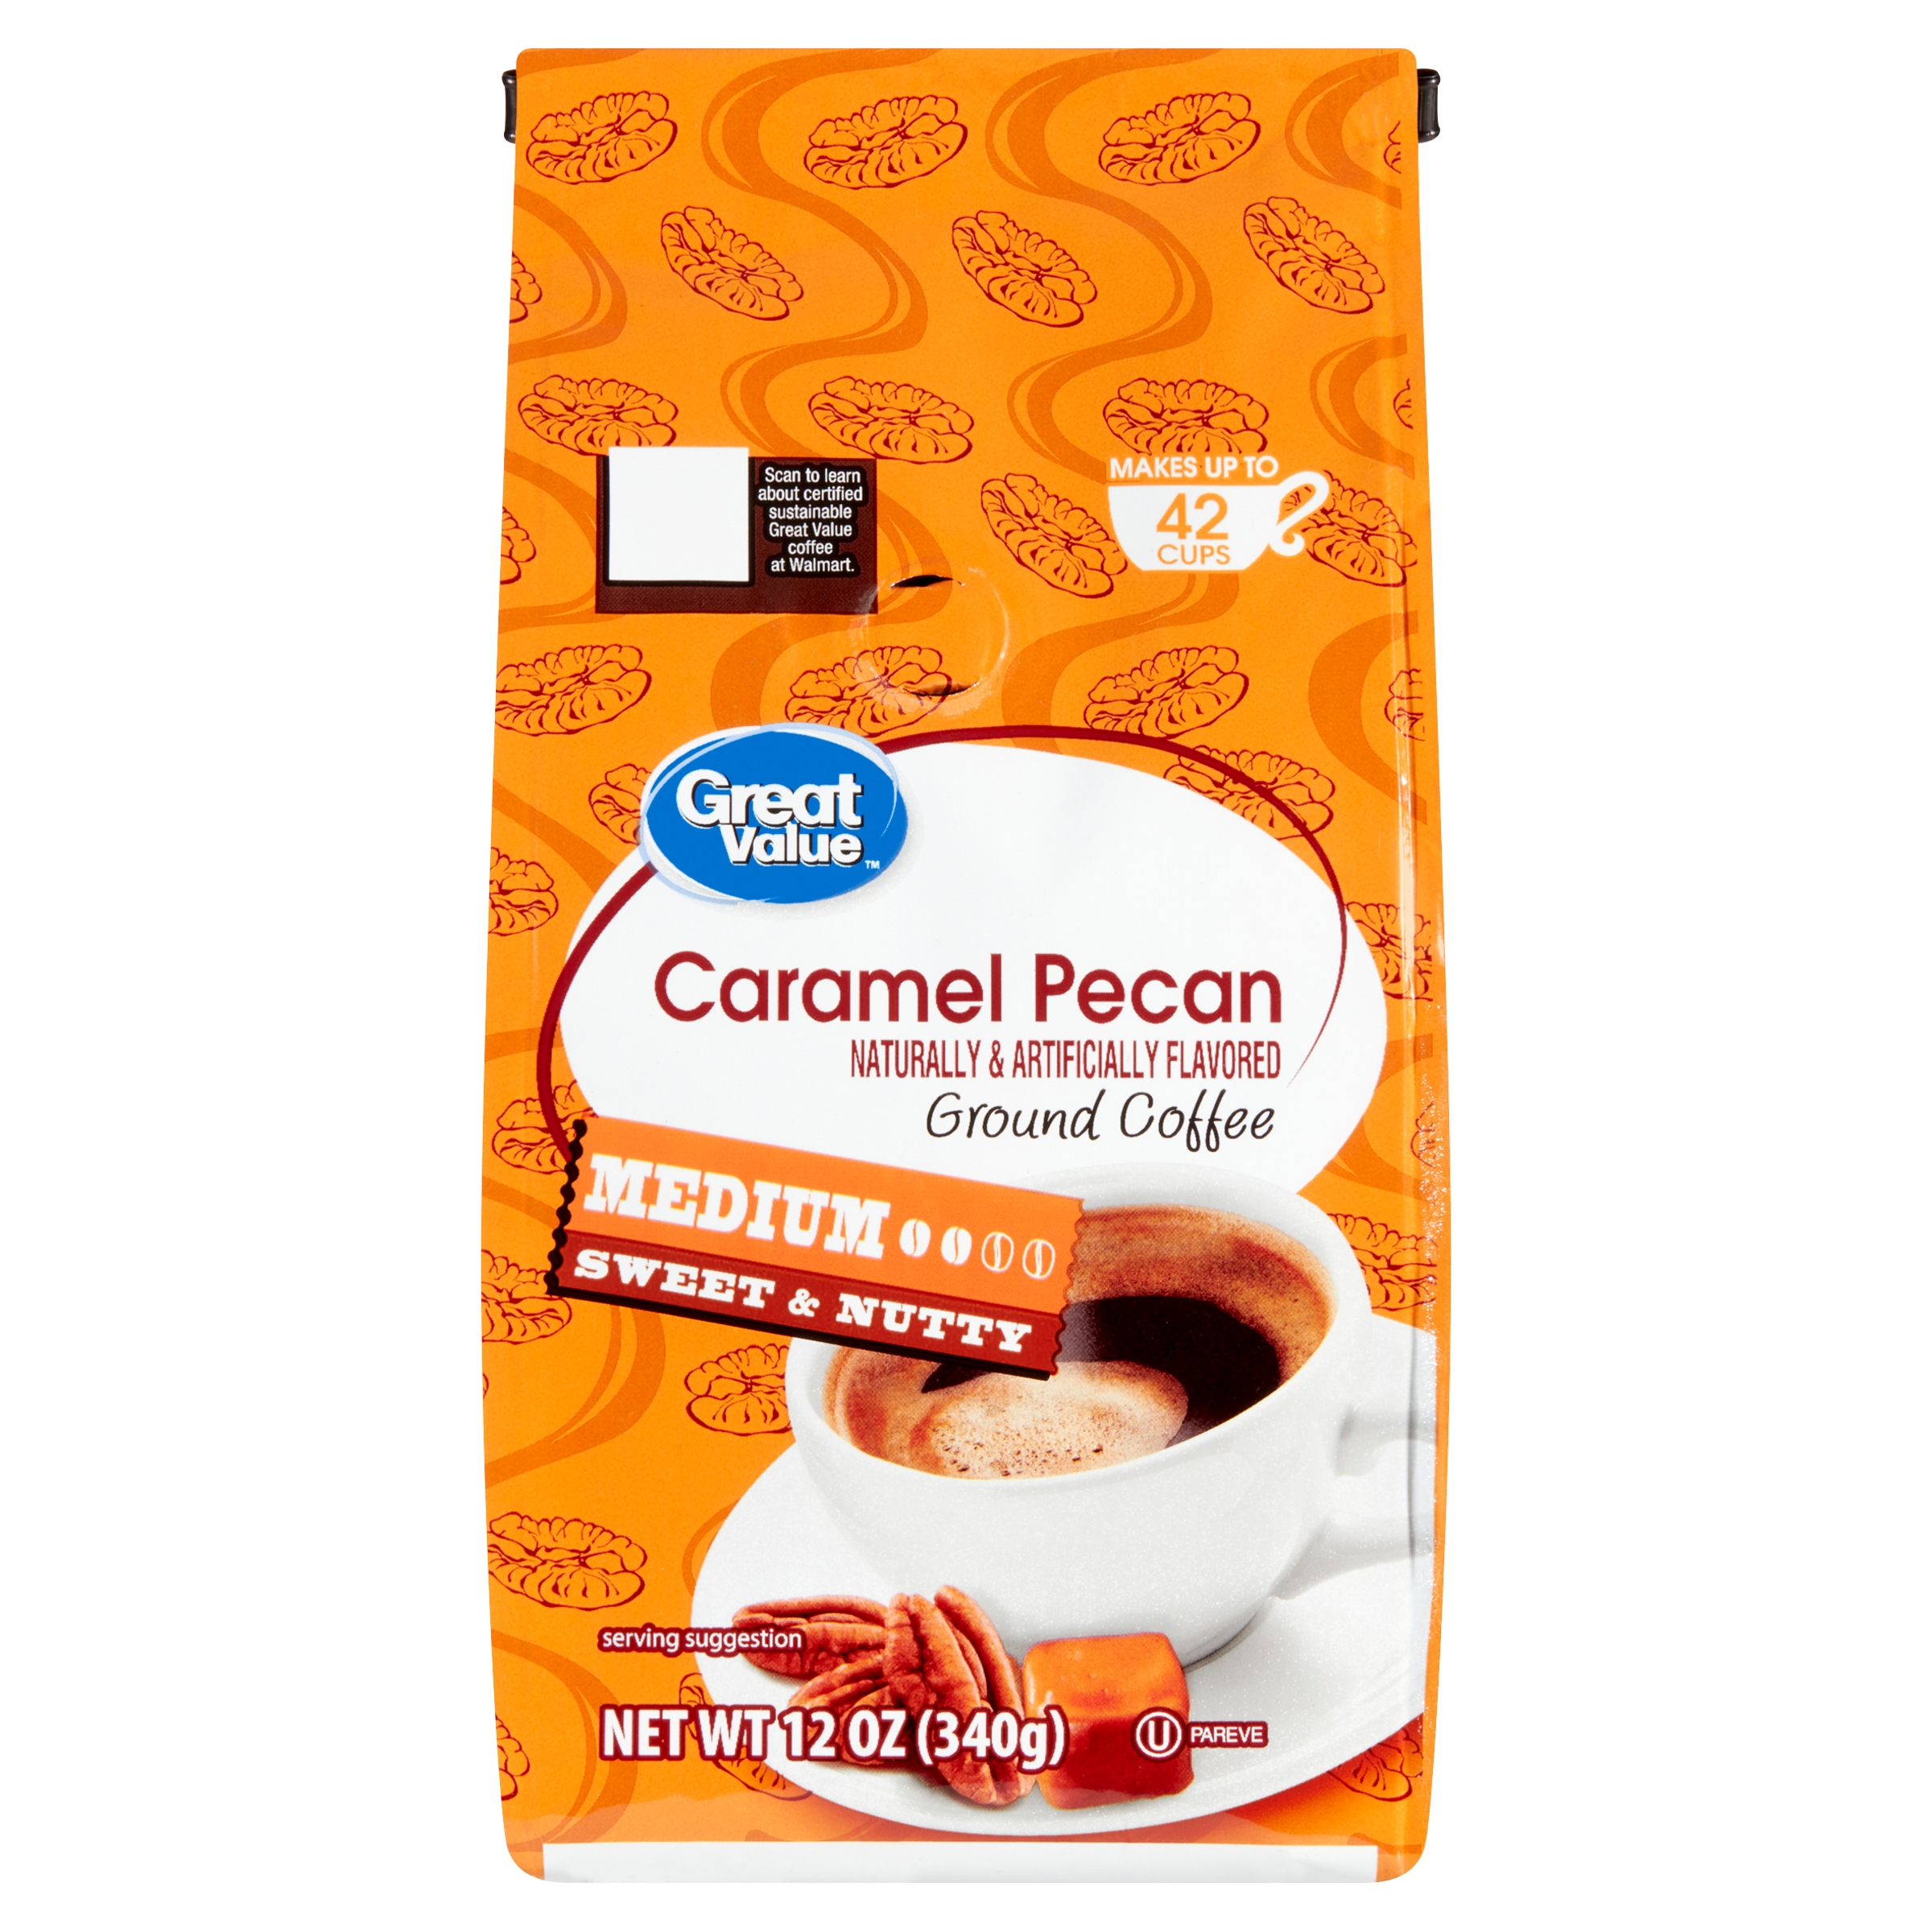 Great Value Caramel Pecan Ground Coffee, 12 oz - image 1 of 8